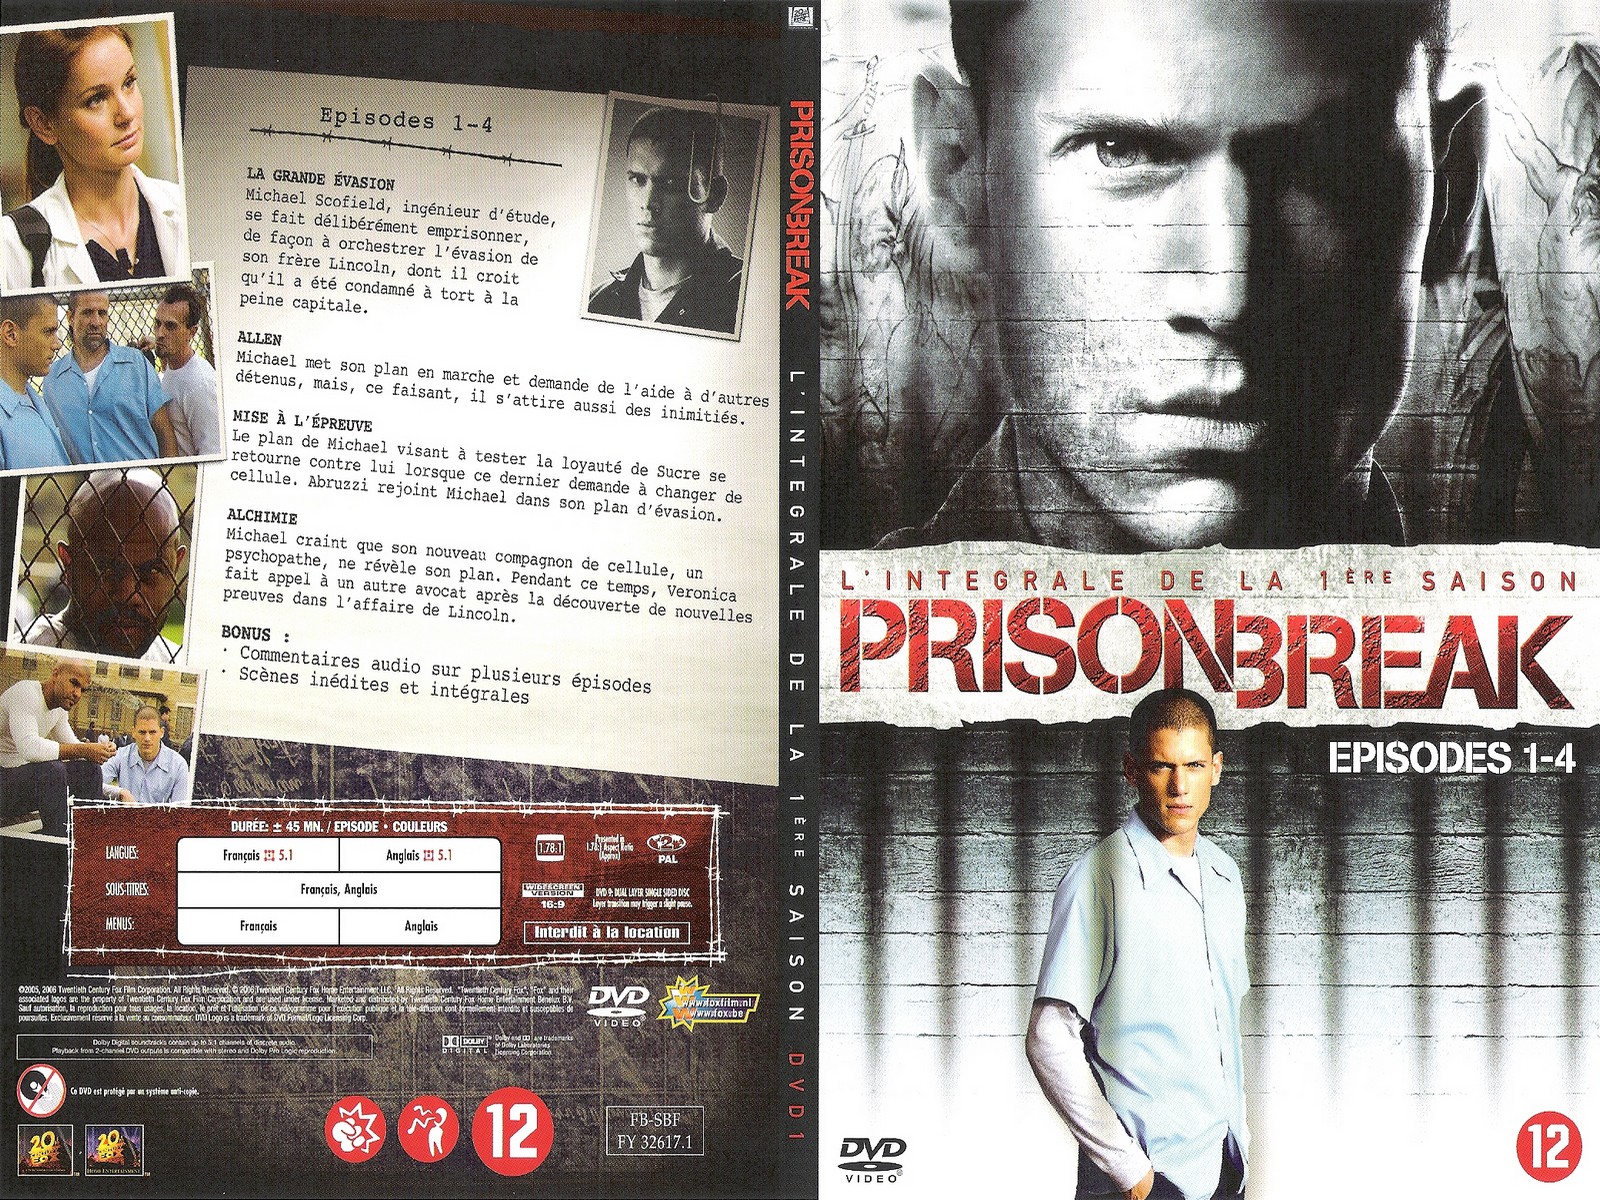 Jaquette DVD Prison break saison 1 dvd 1 - SLIM